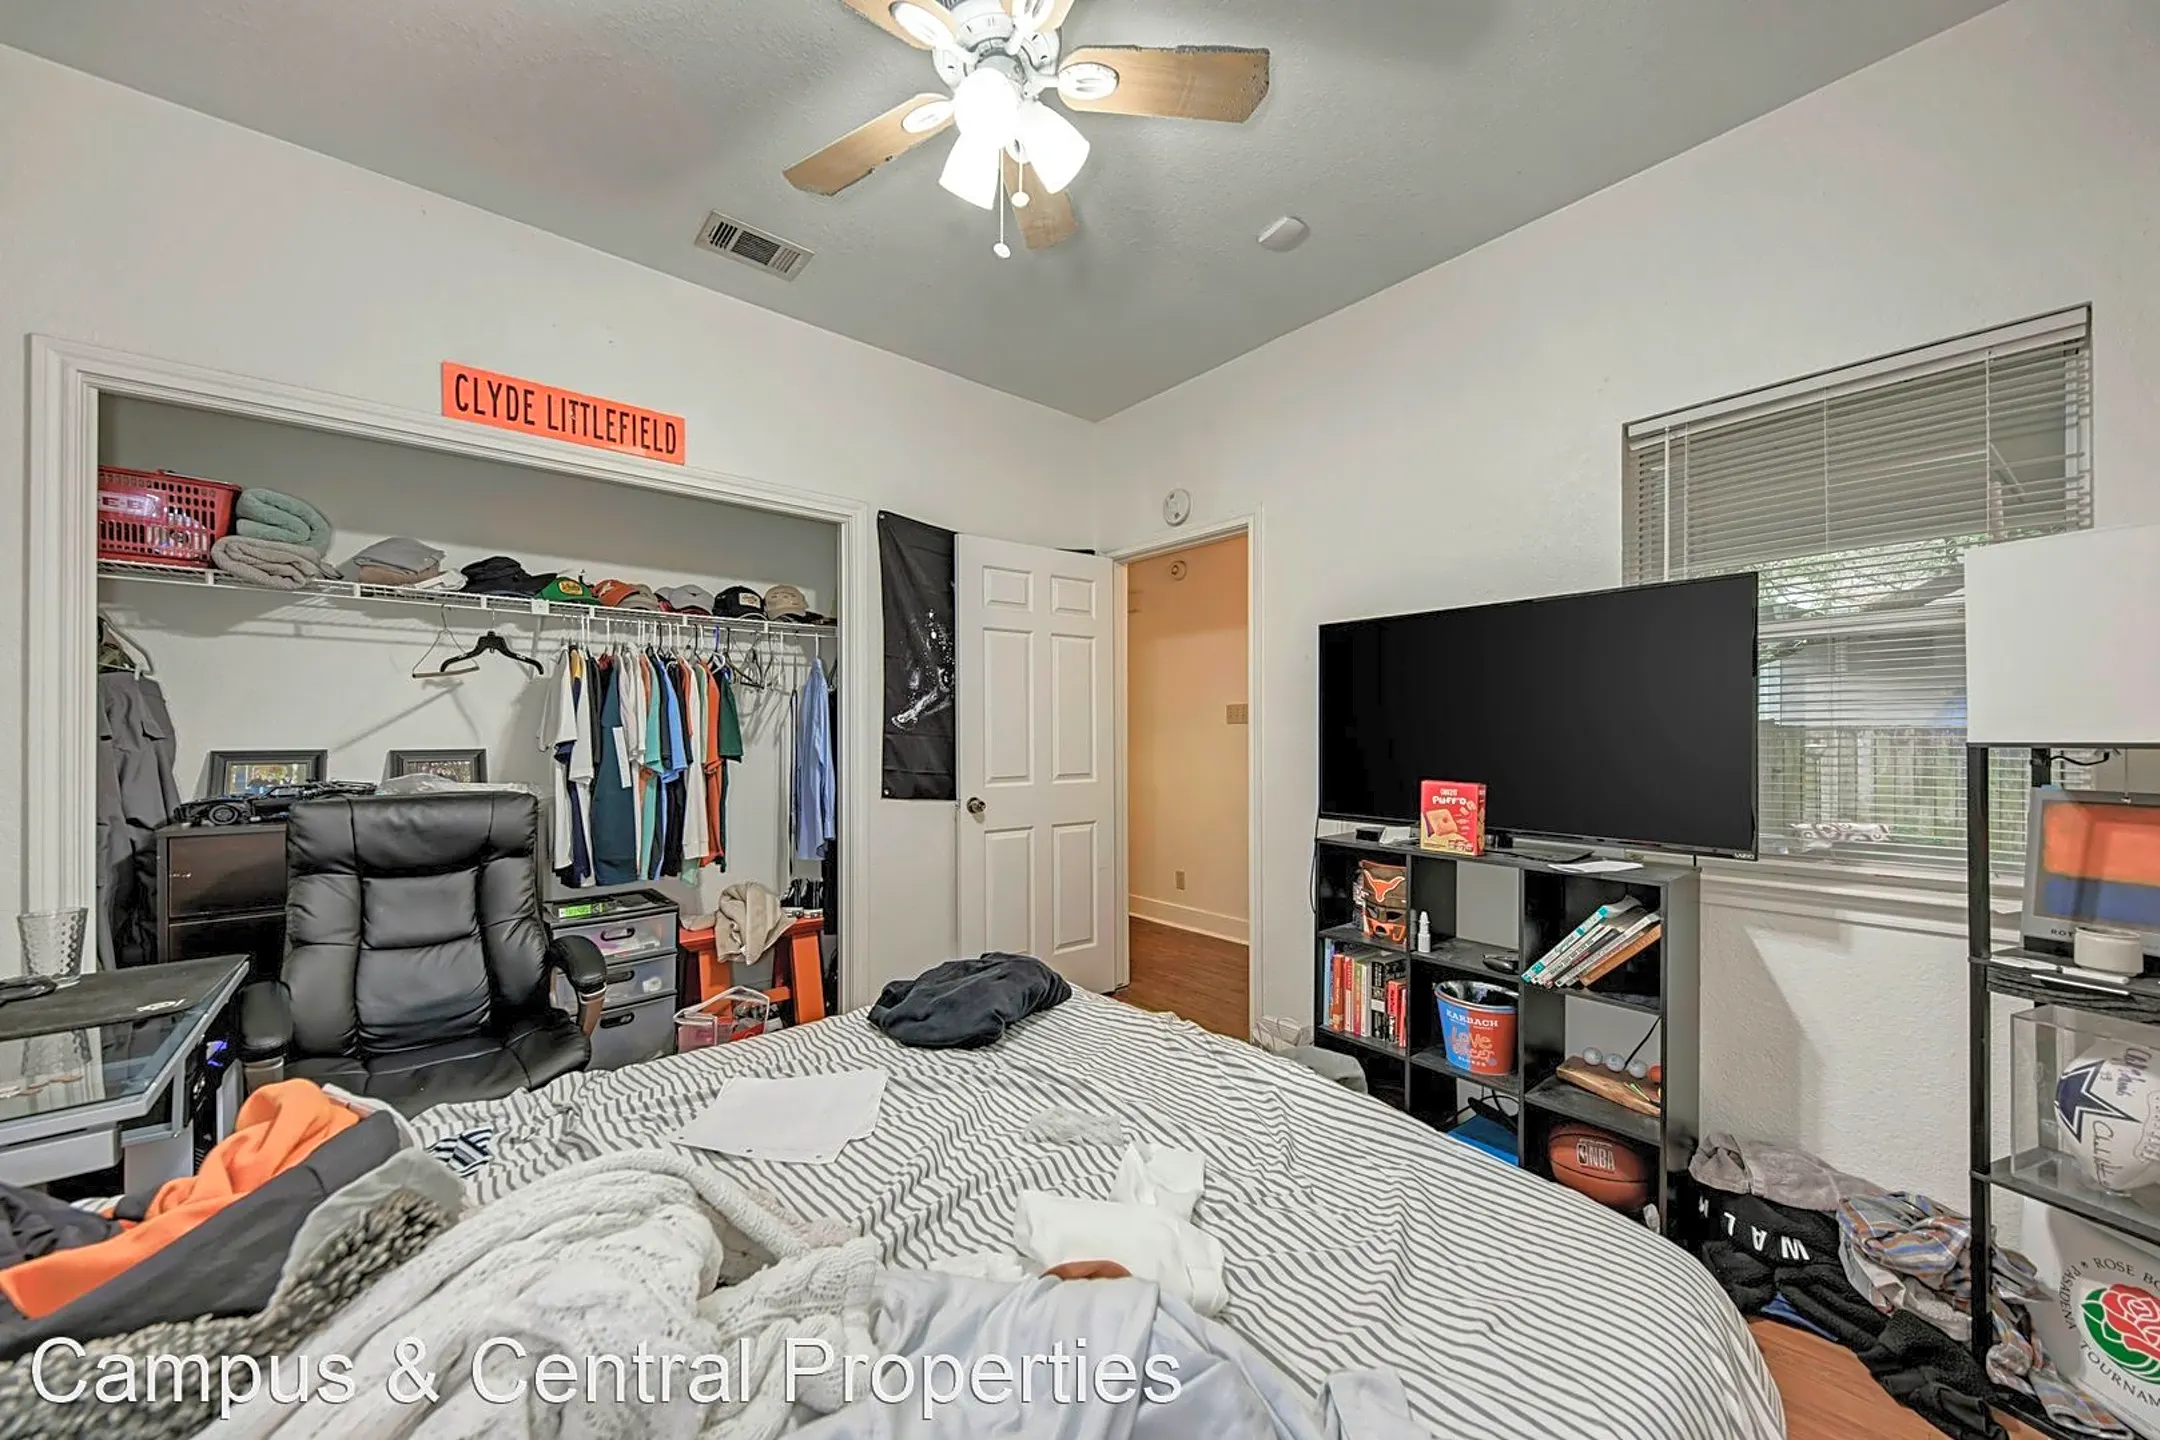 Bedroom - 1205 W 22nd St - Austin, TX